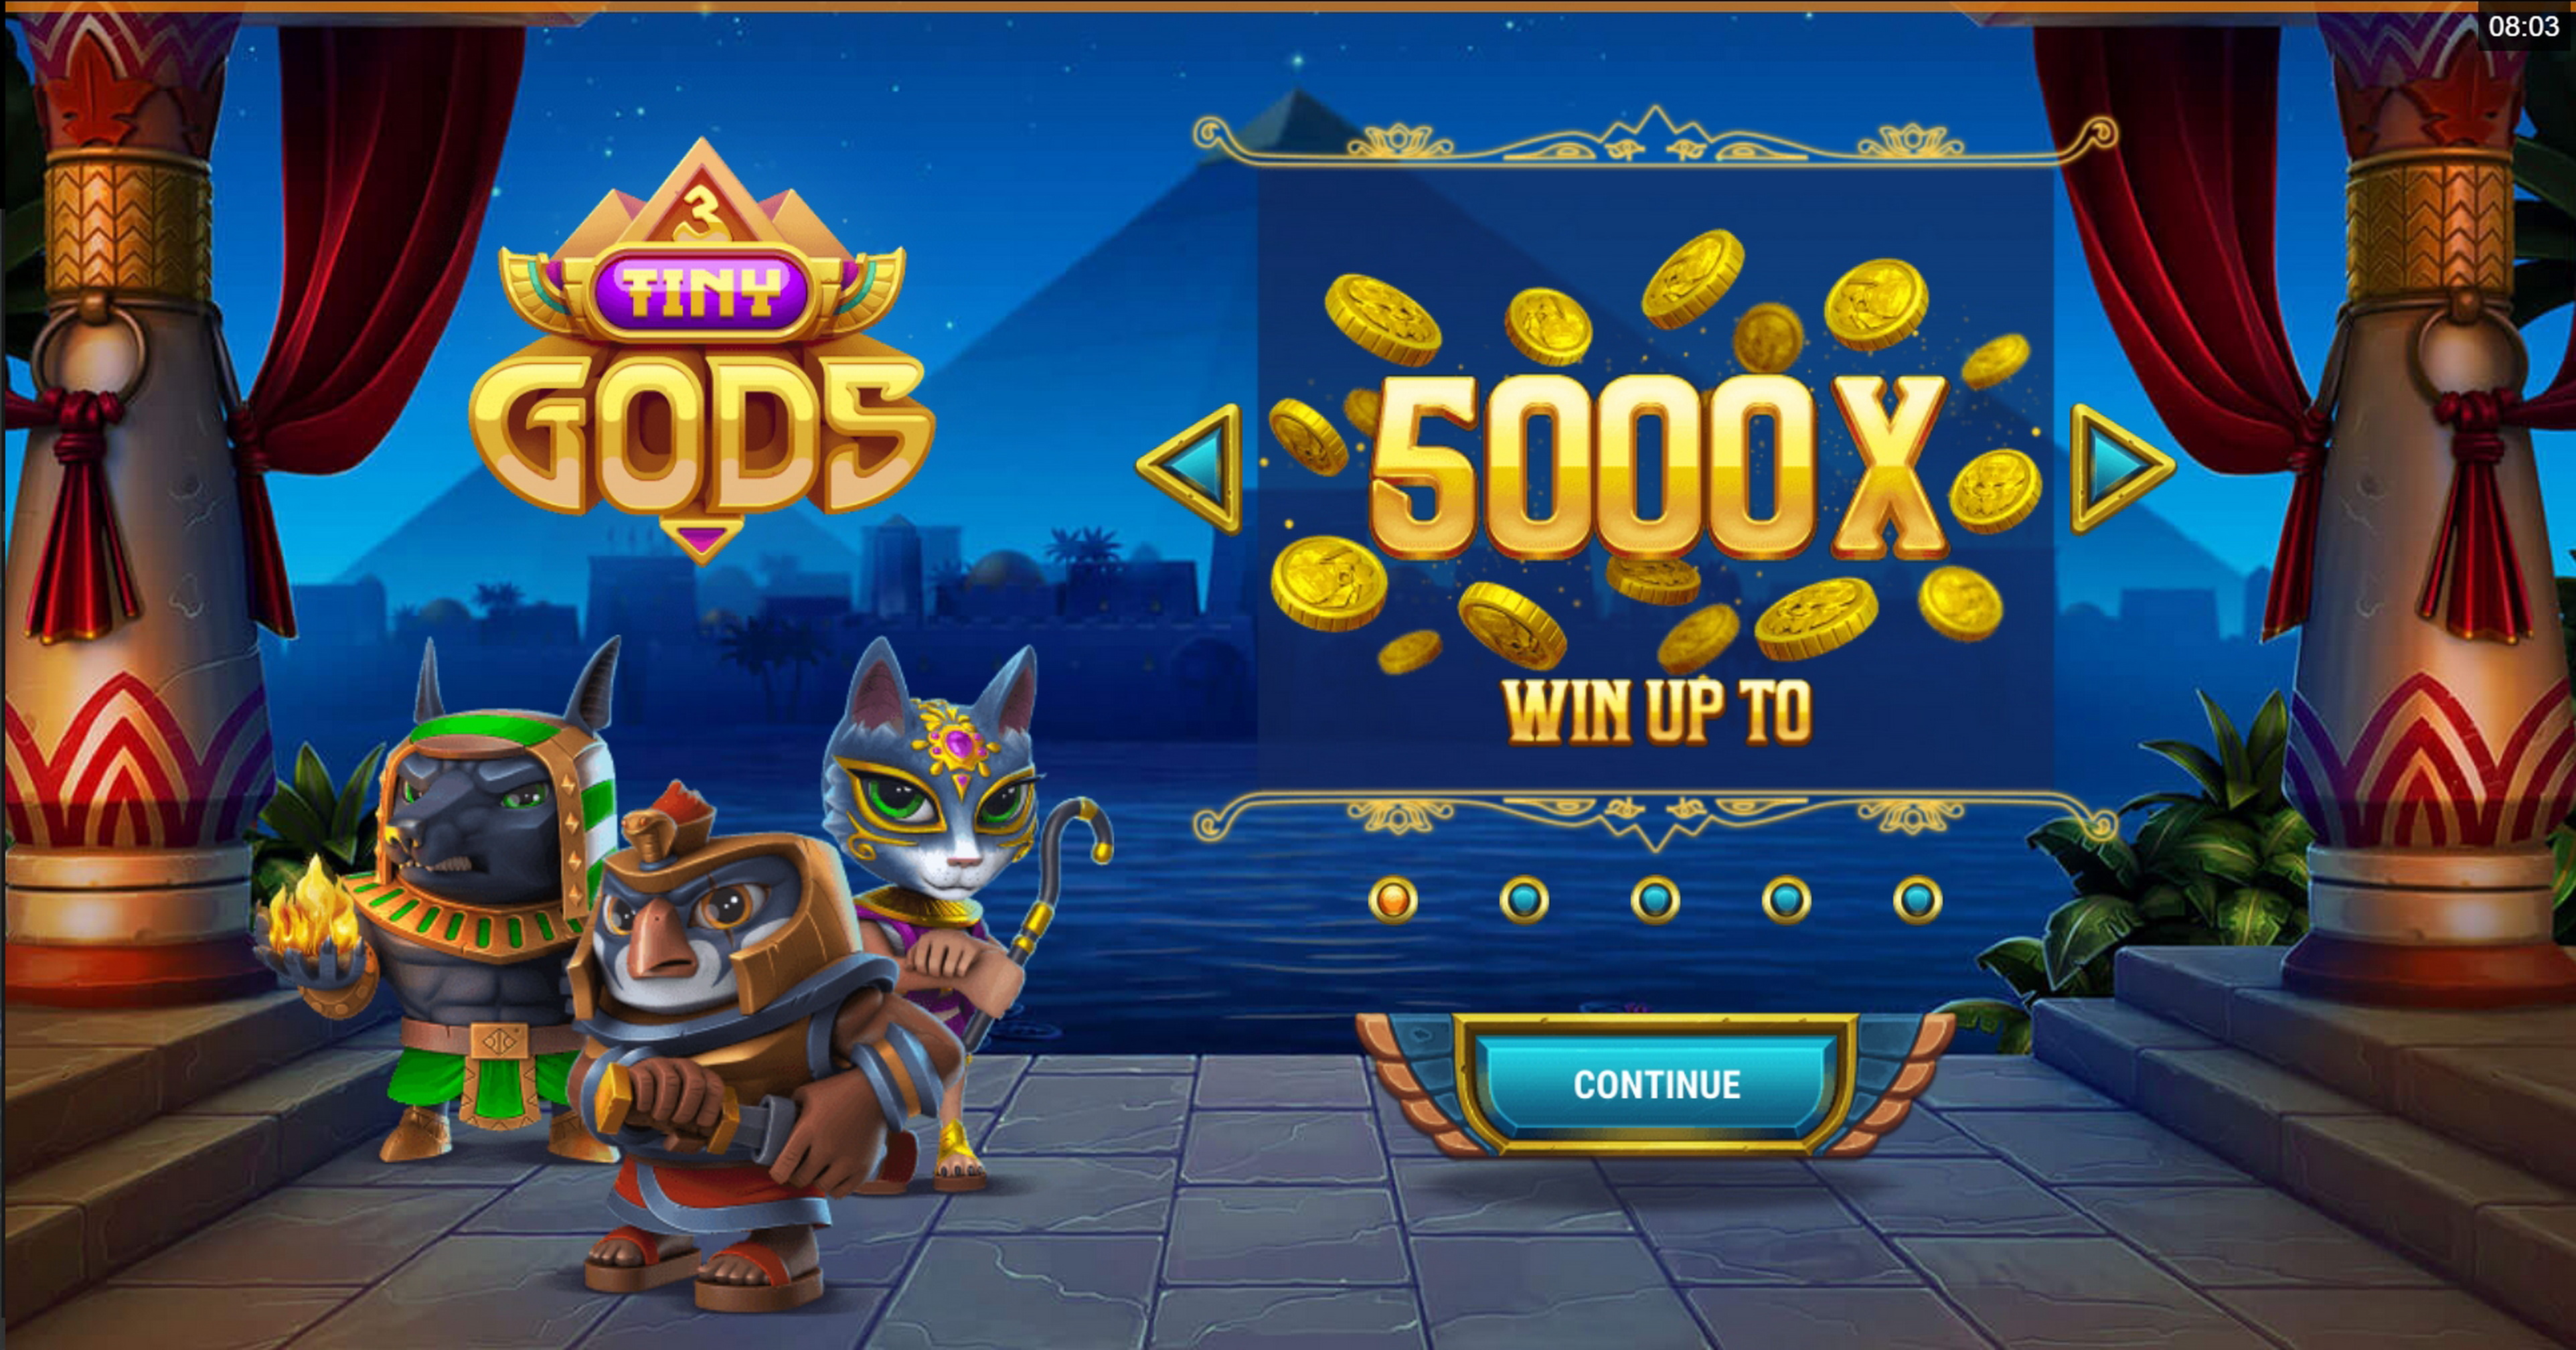 Play 3 Tiny Gods Free Casino Slot Game by Foxium